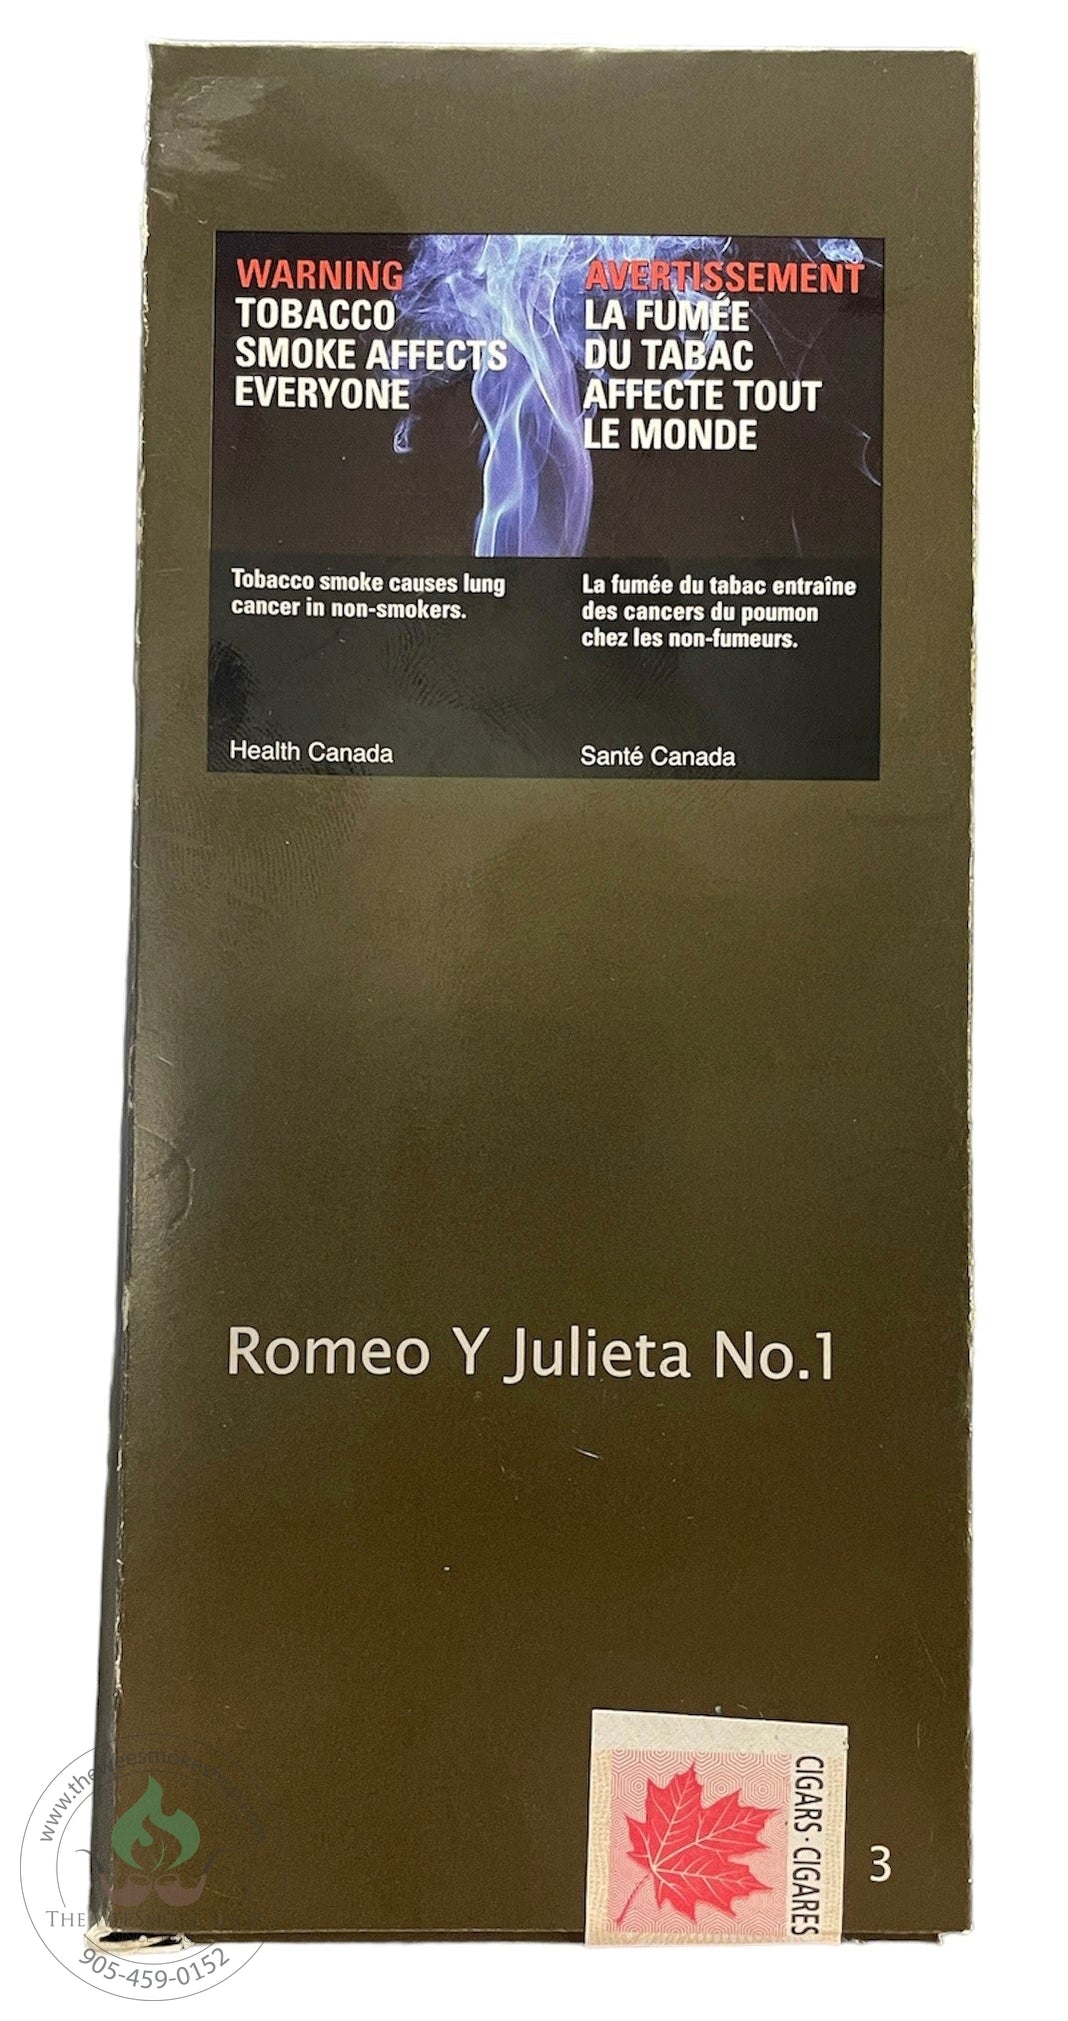 Romeo y Julieta Cigars